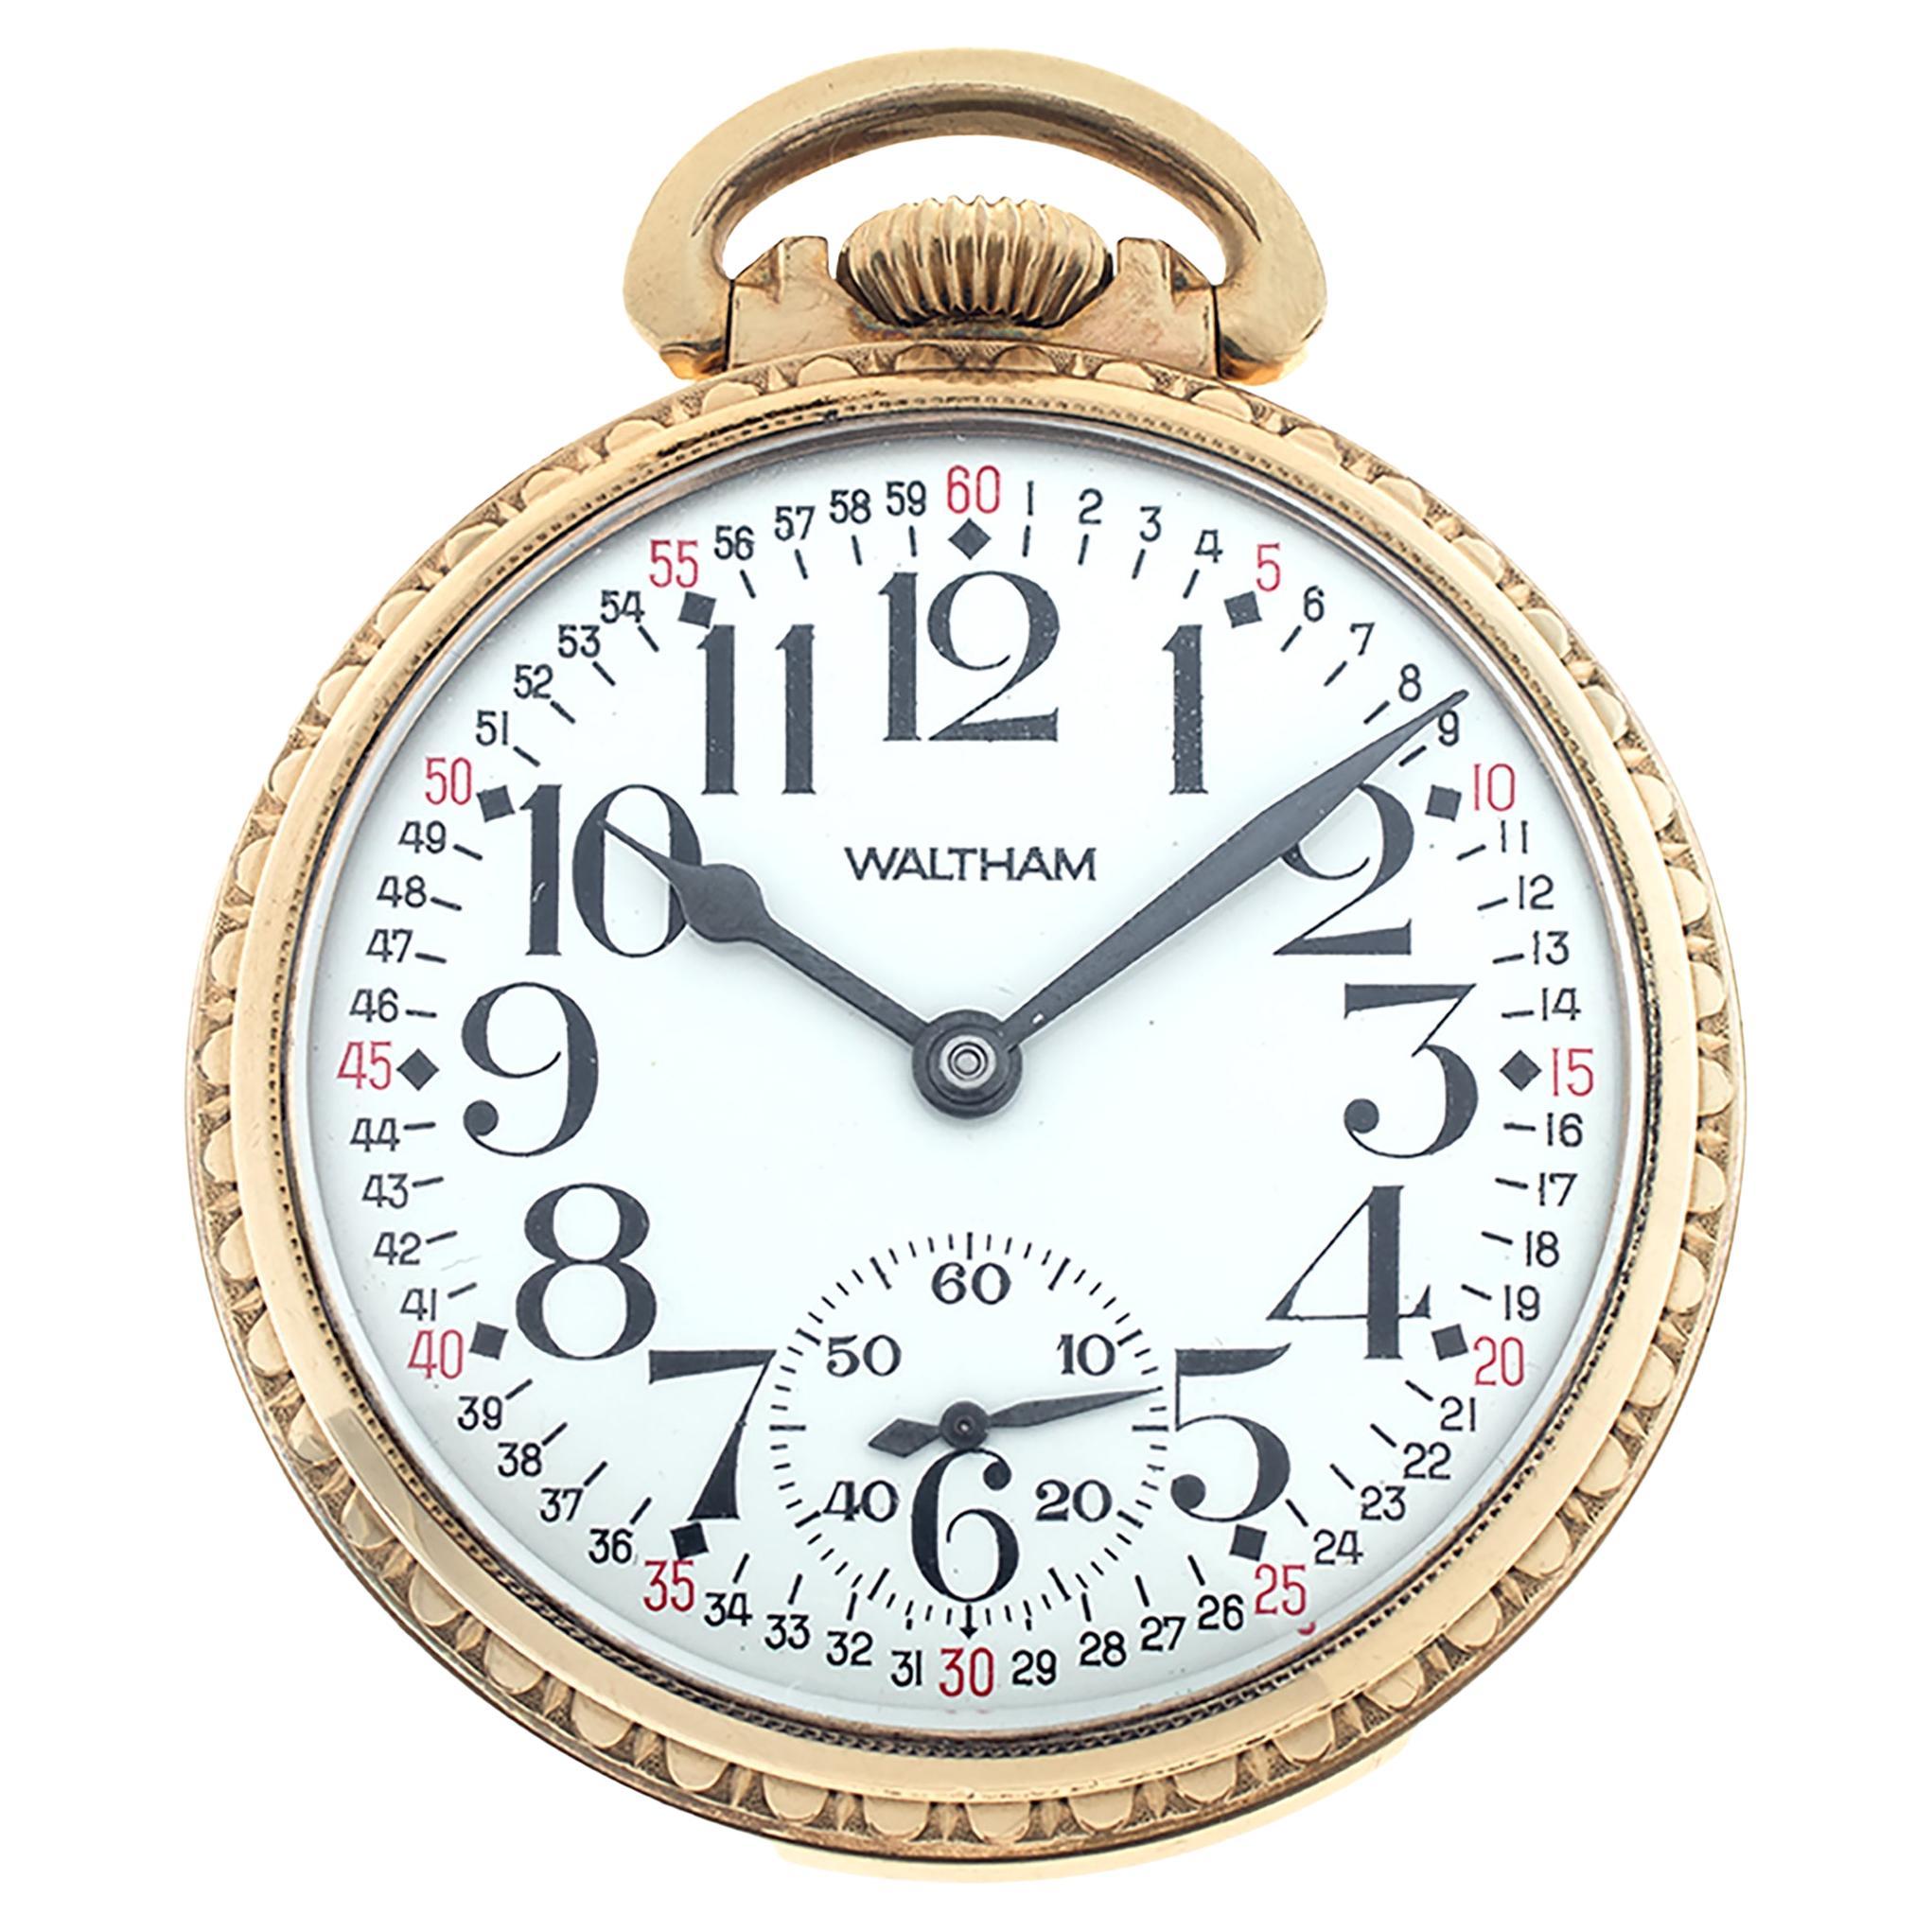 Waltham Vanguard 10k Rolled Gold Pocket Watch For Sale